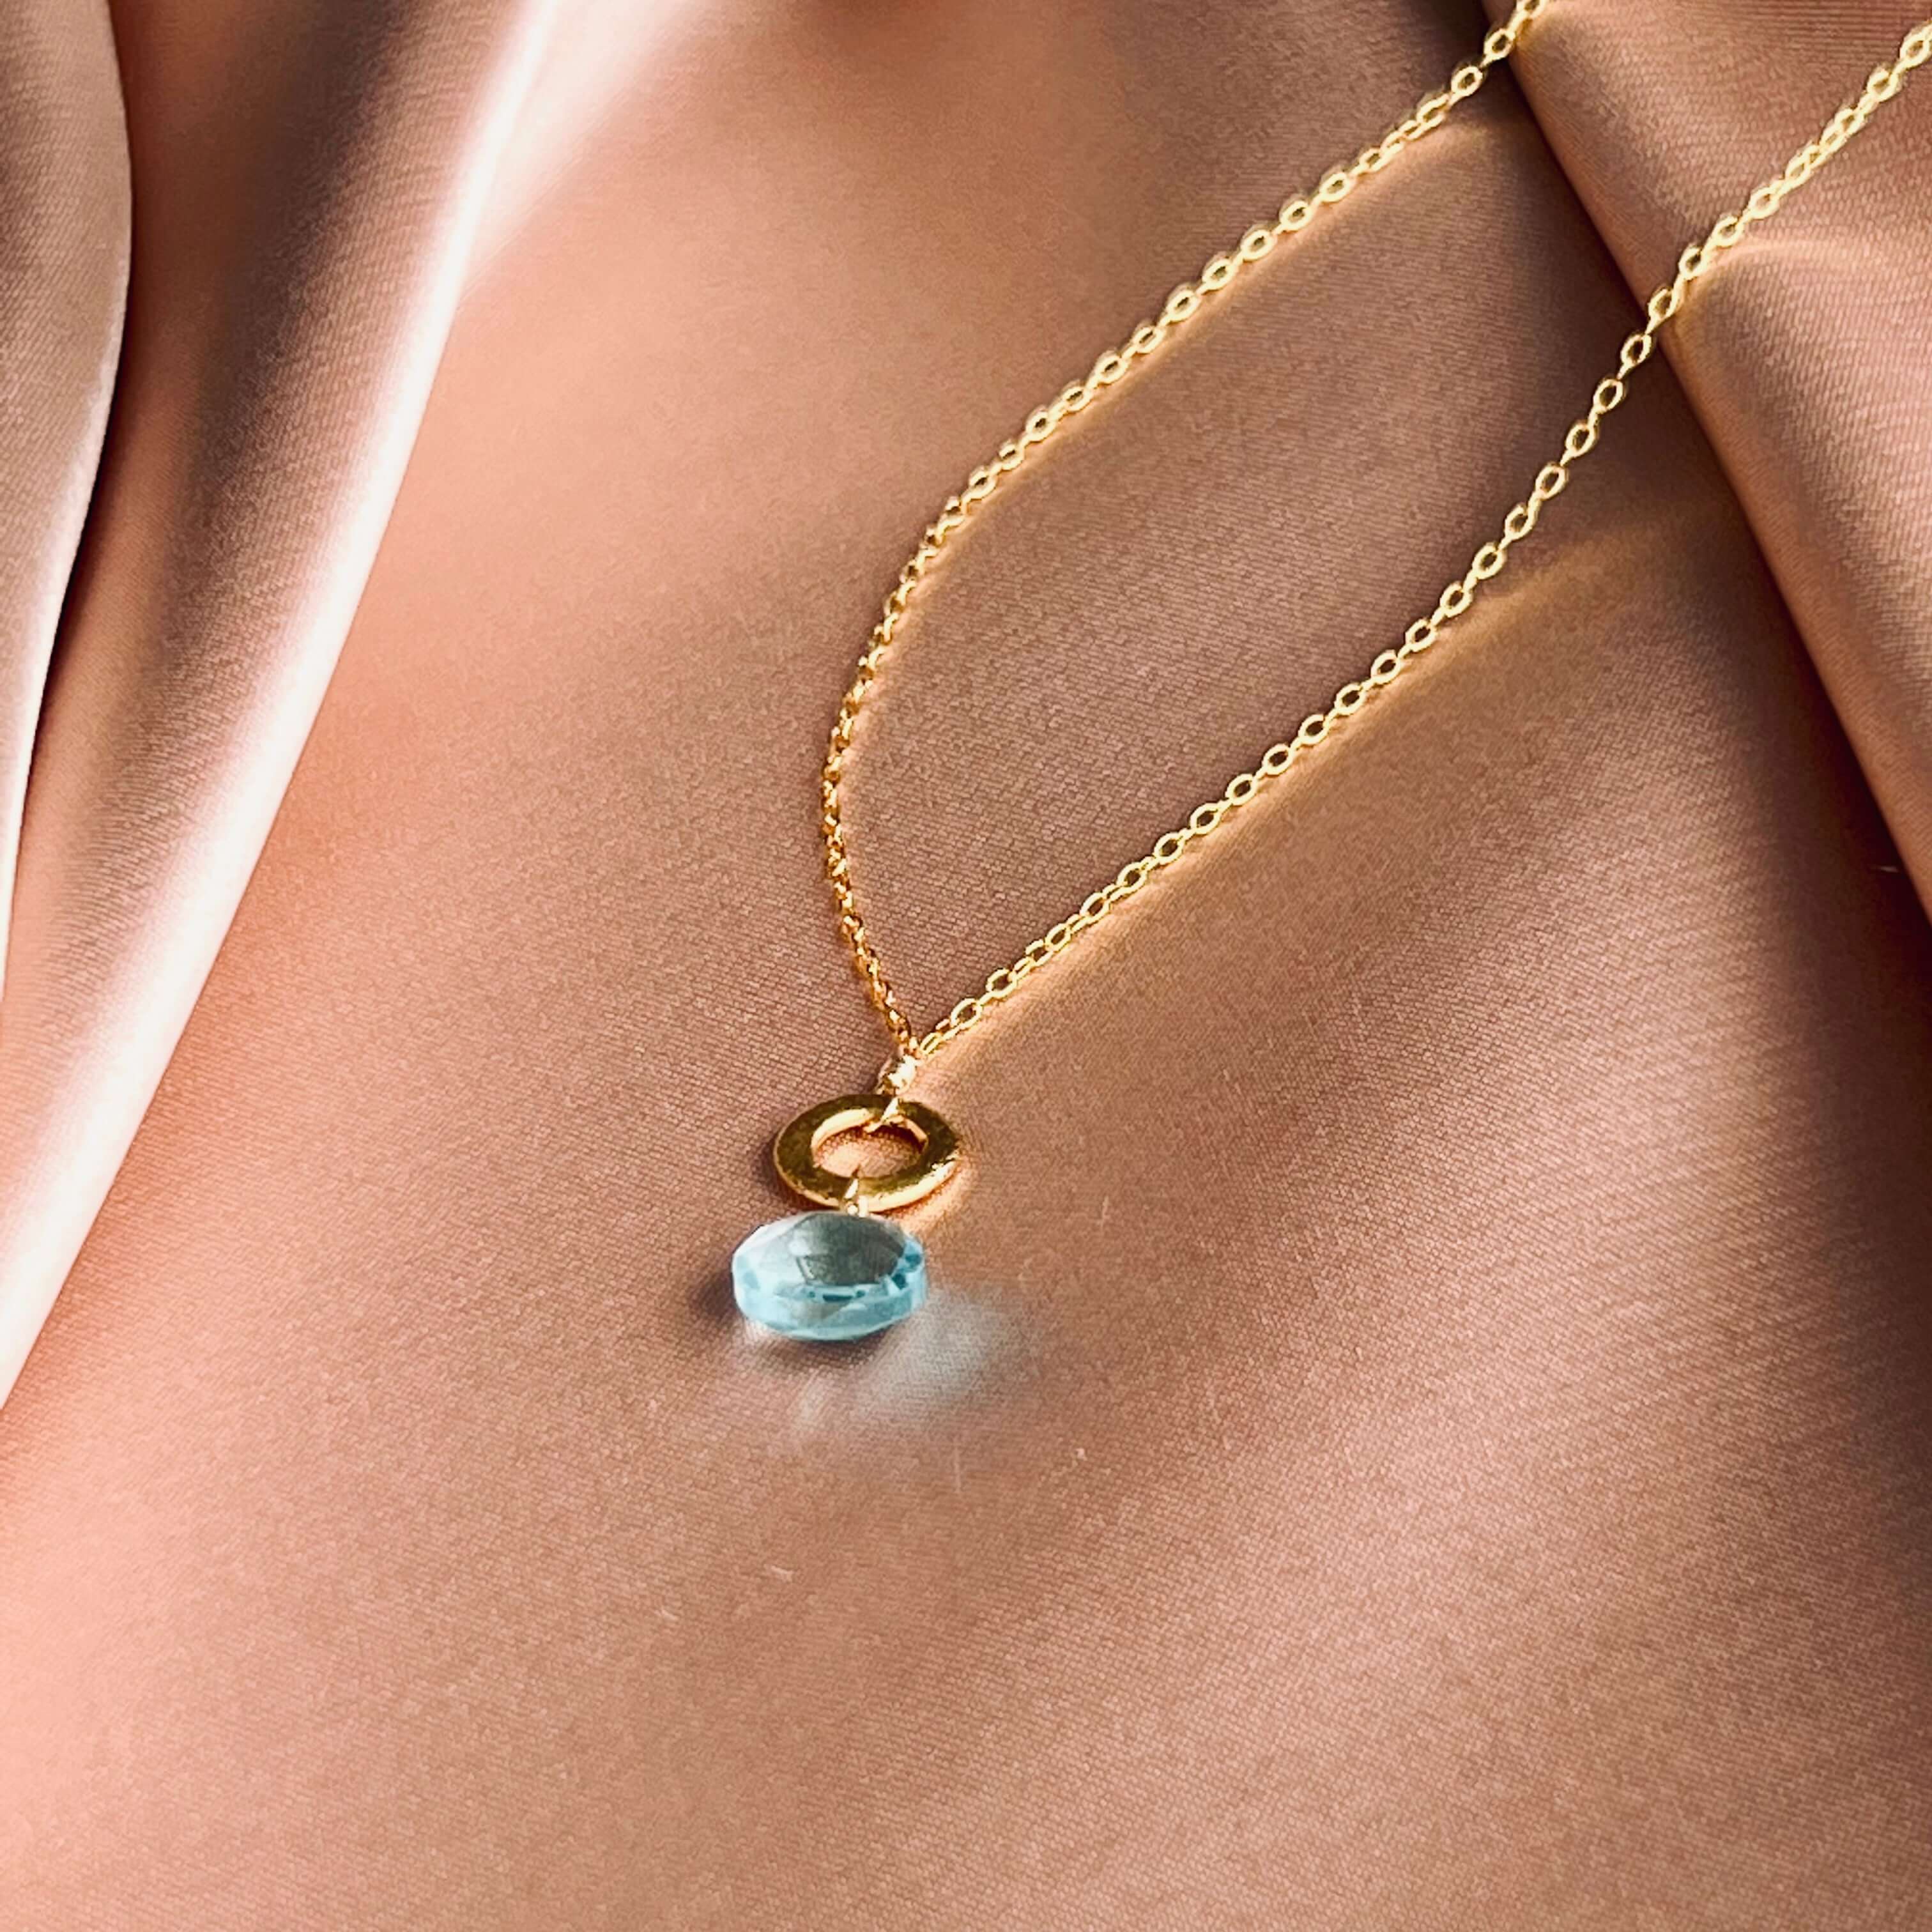 Delicate Aquamarine Quartz Layering Necklace in 14k Gold Plated Silver